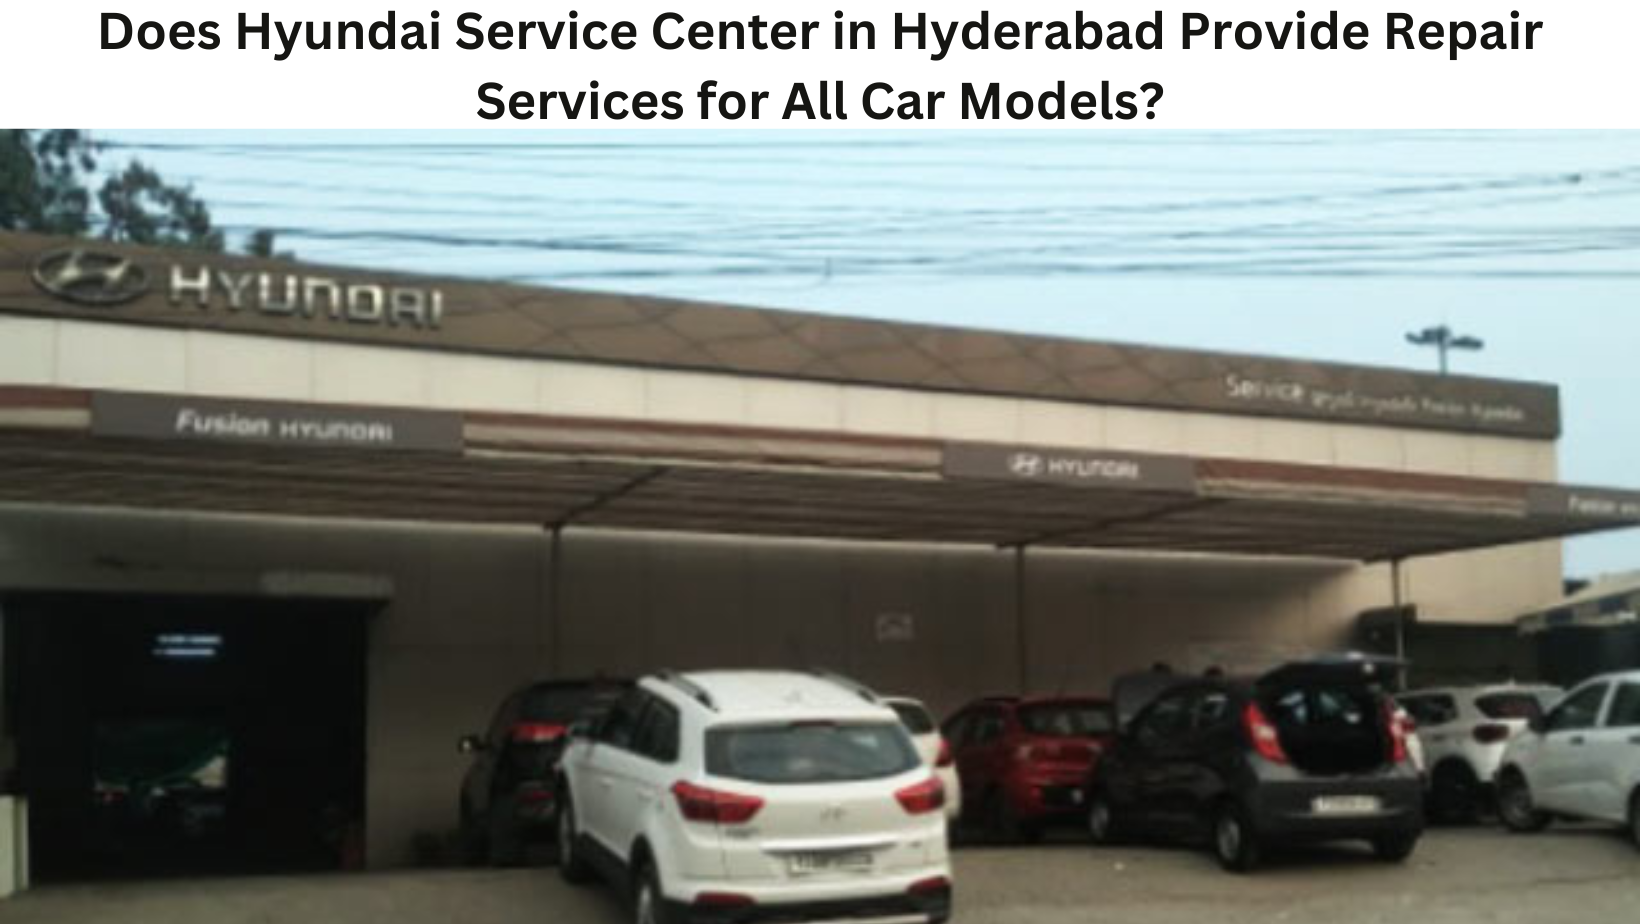 Hyundai Service Center